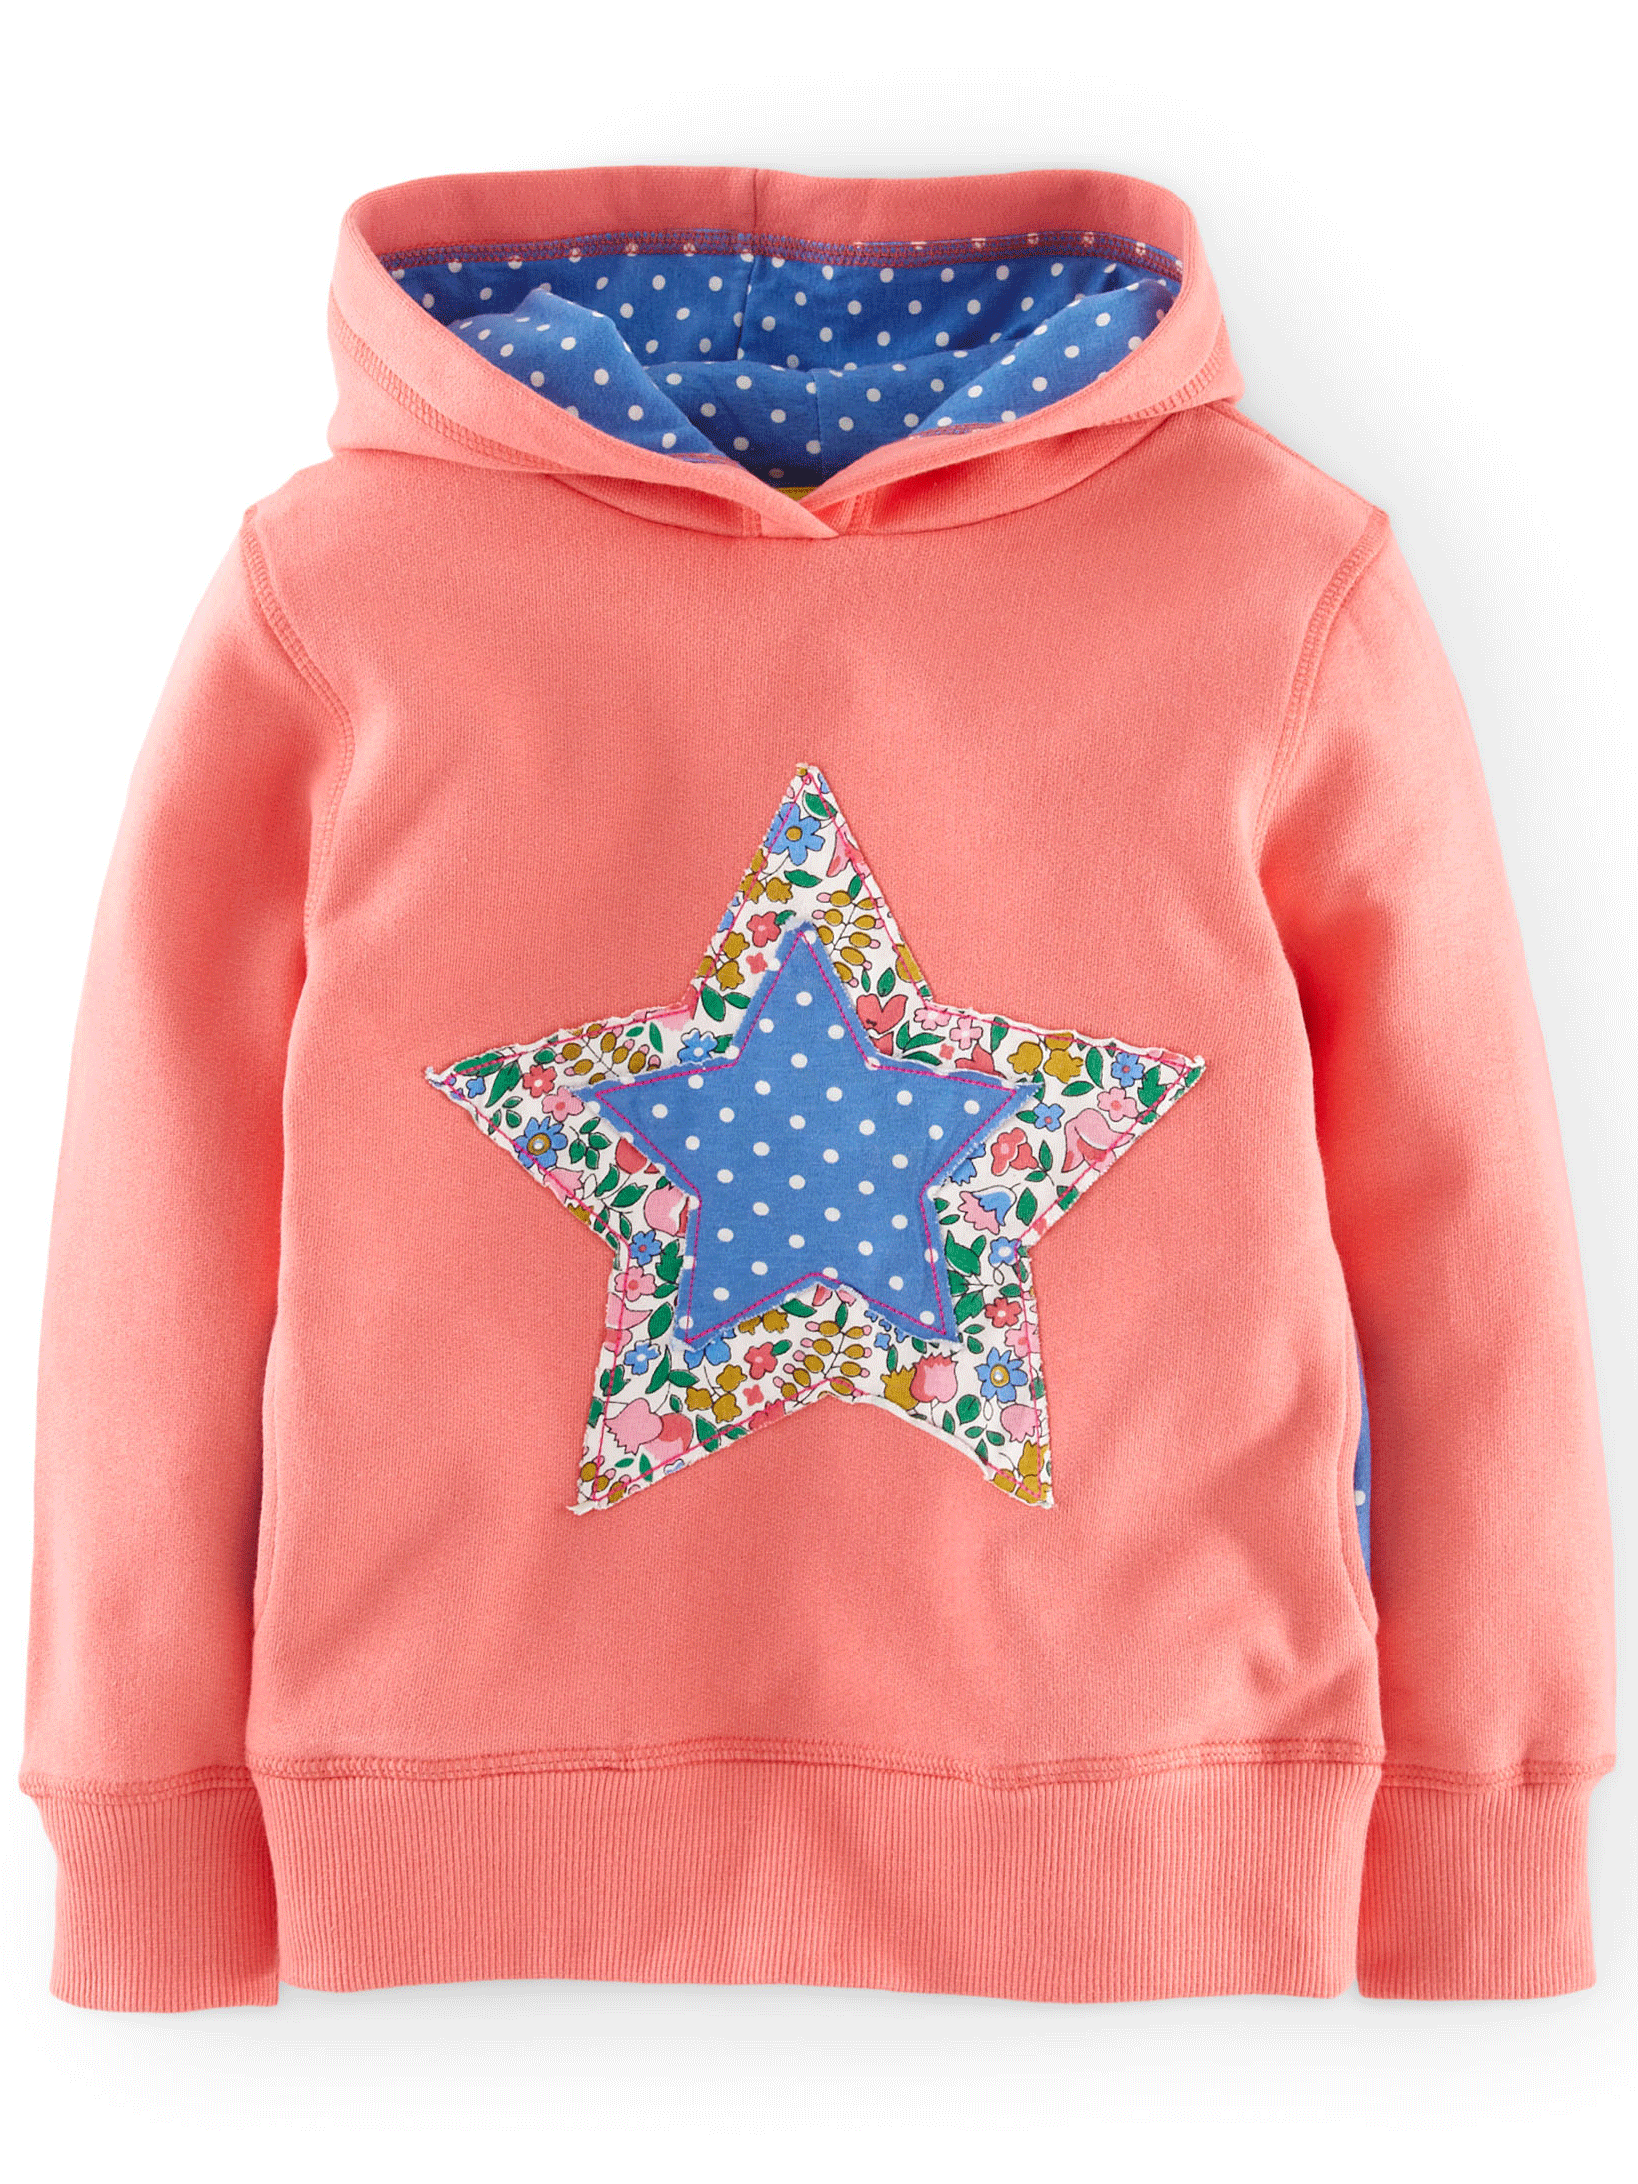 Vasego Boys Girls Plain Coloured Hoodie Jacket Kids Children Pockets Warm Hoody Hooded Sweatshirt Outerwear Tops UK